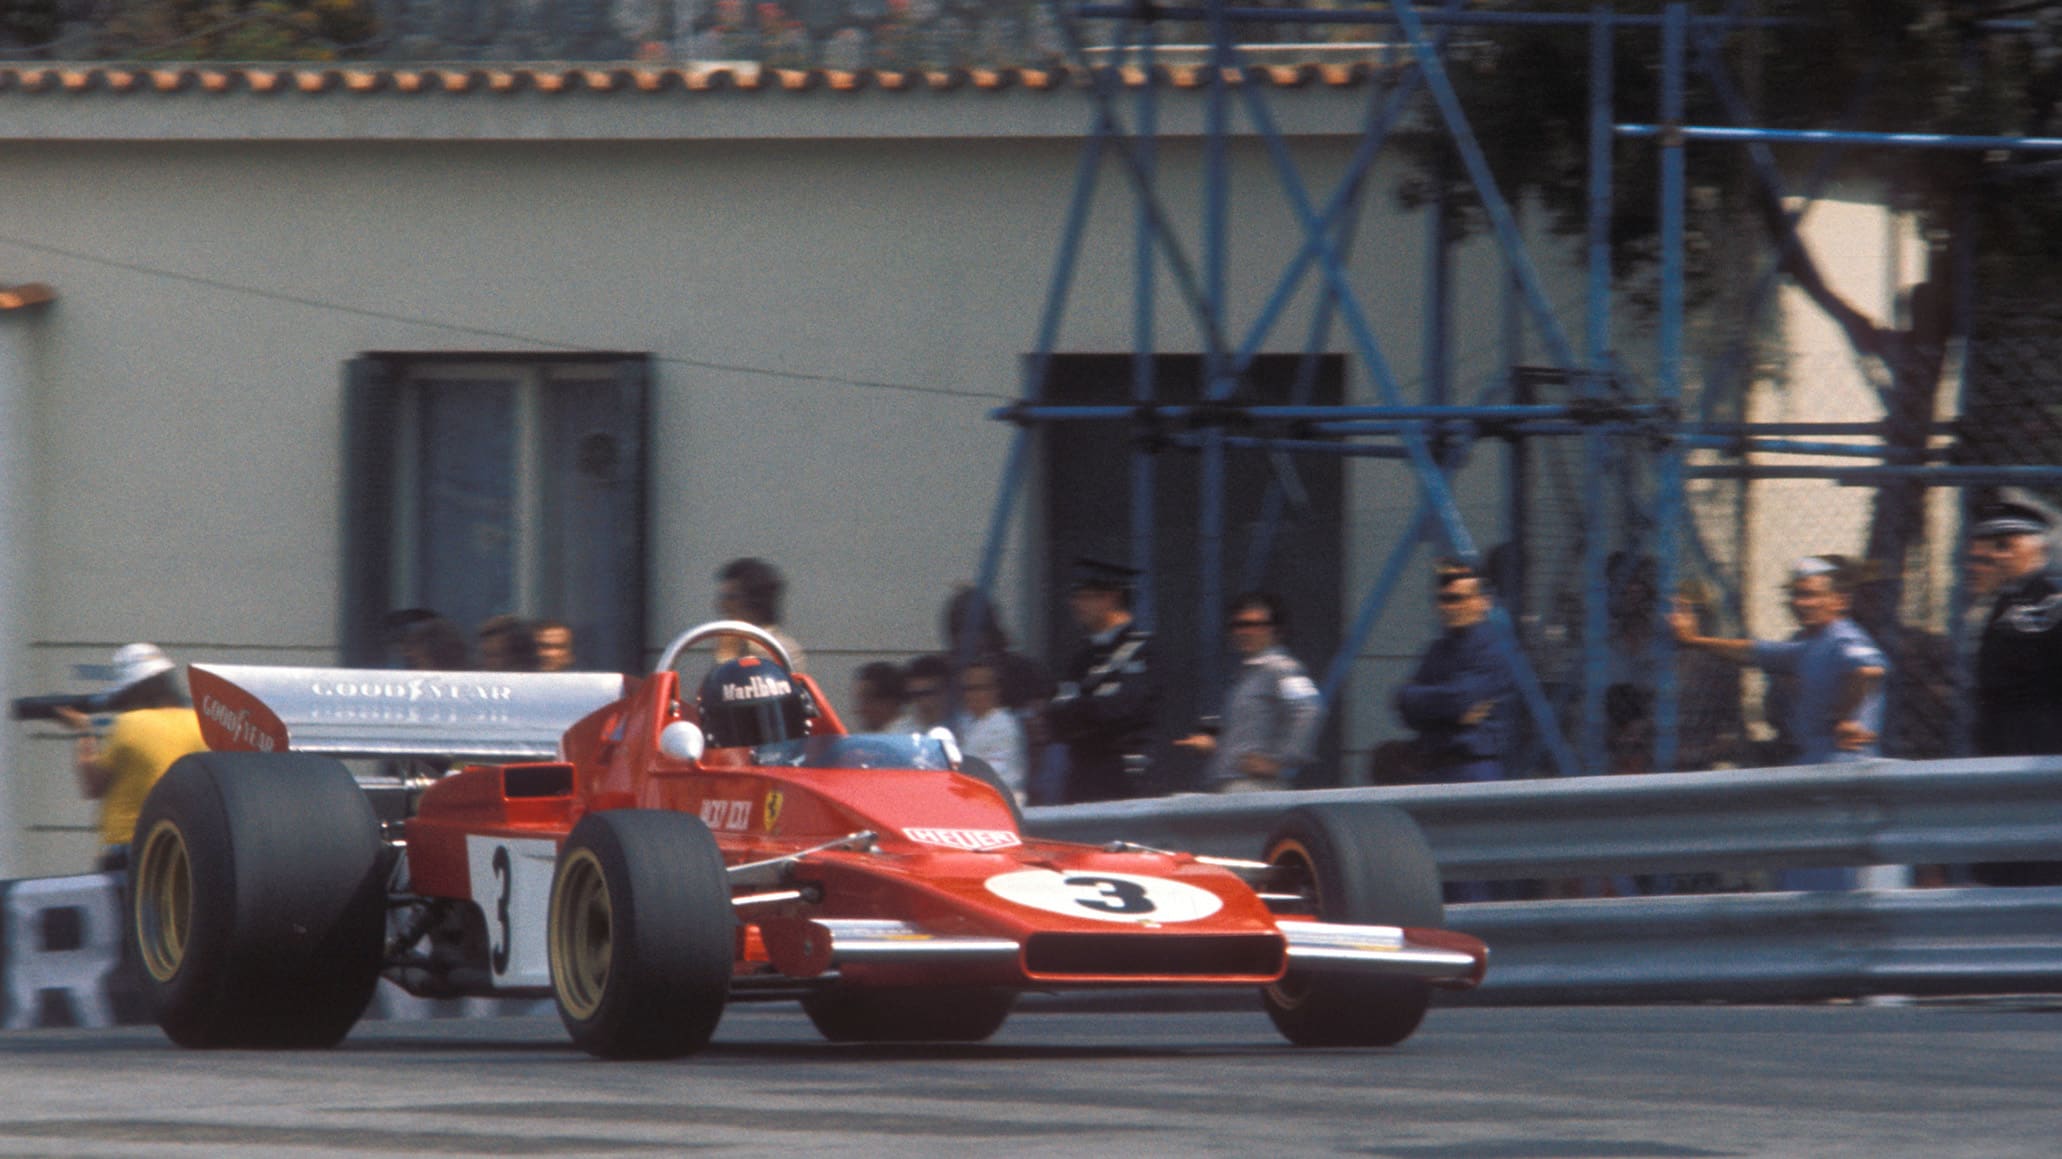 Jacky Ickx in Ferrari 312 B3 in 1973